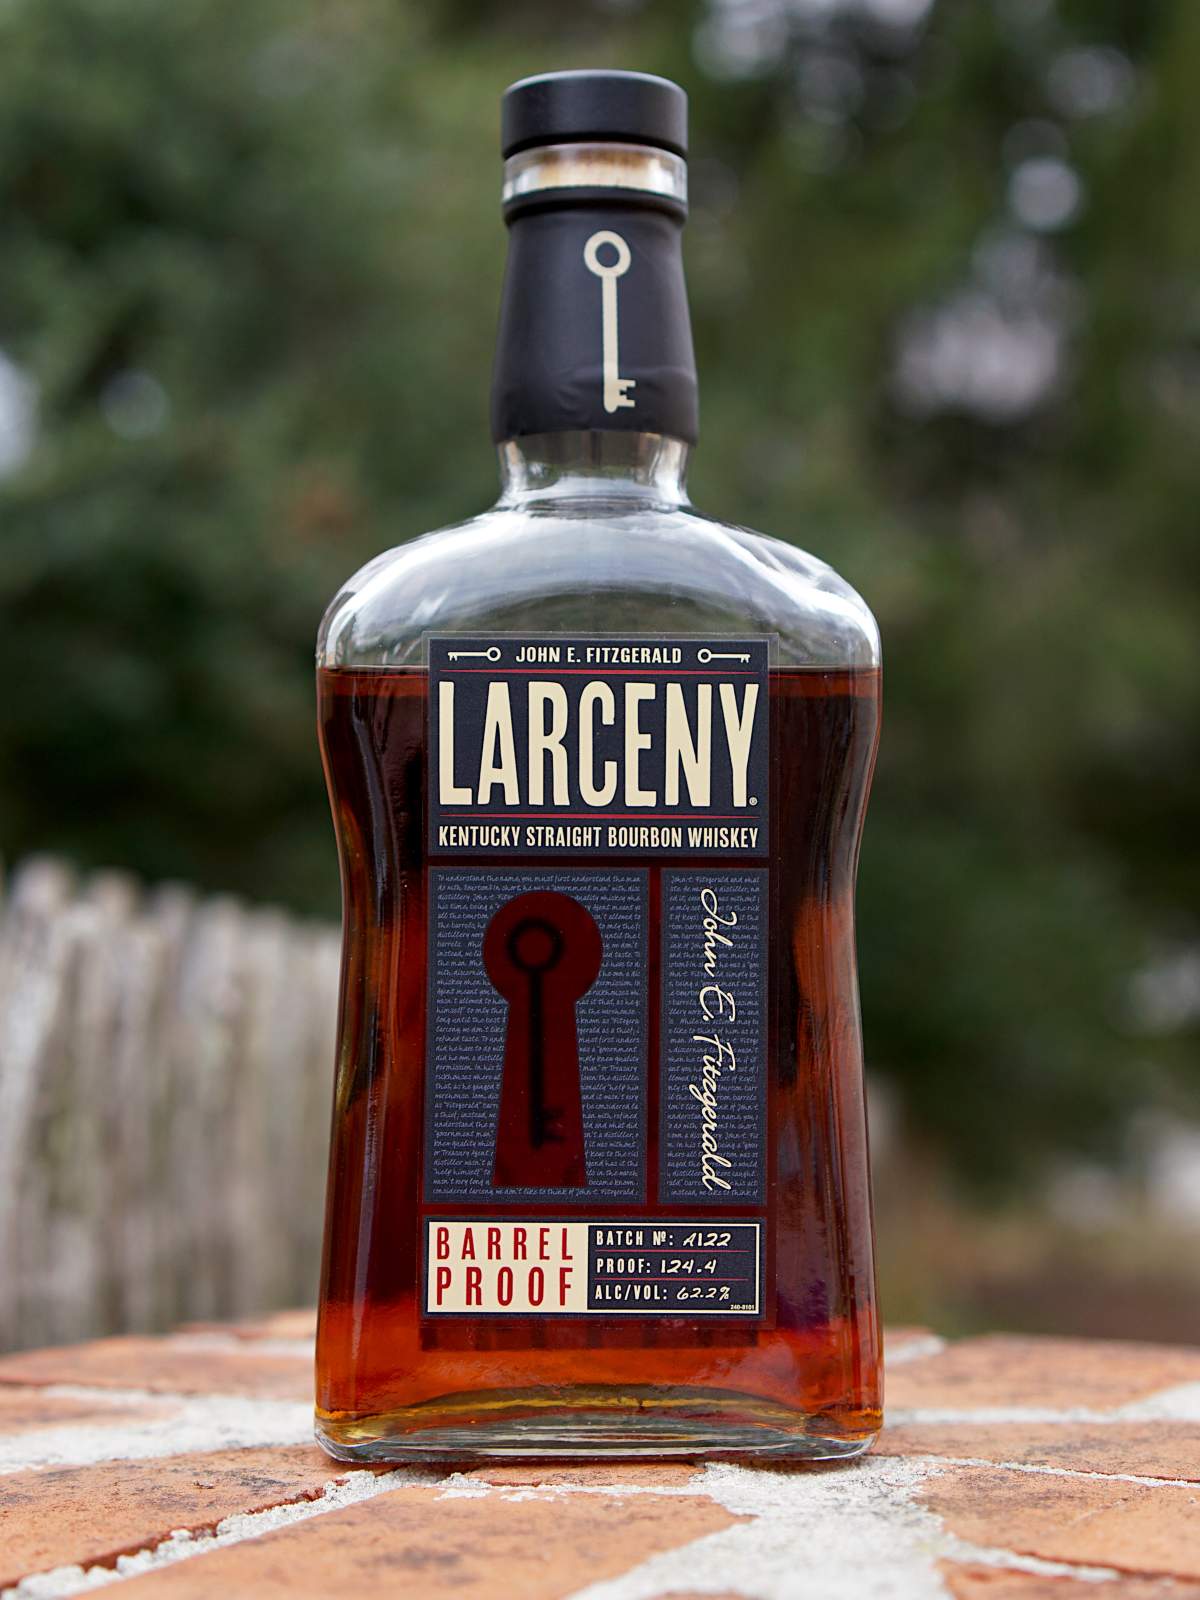 larceny barrel proof A122 featured